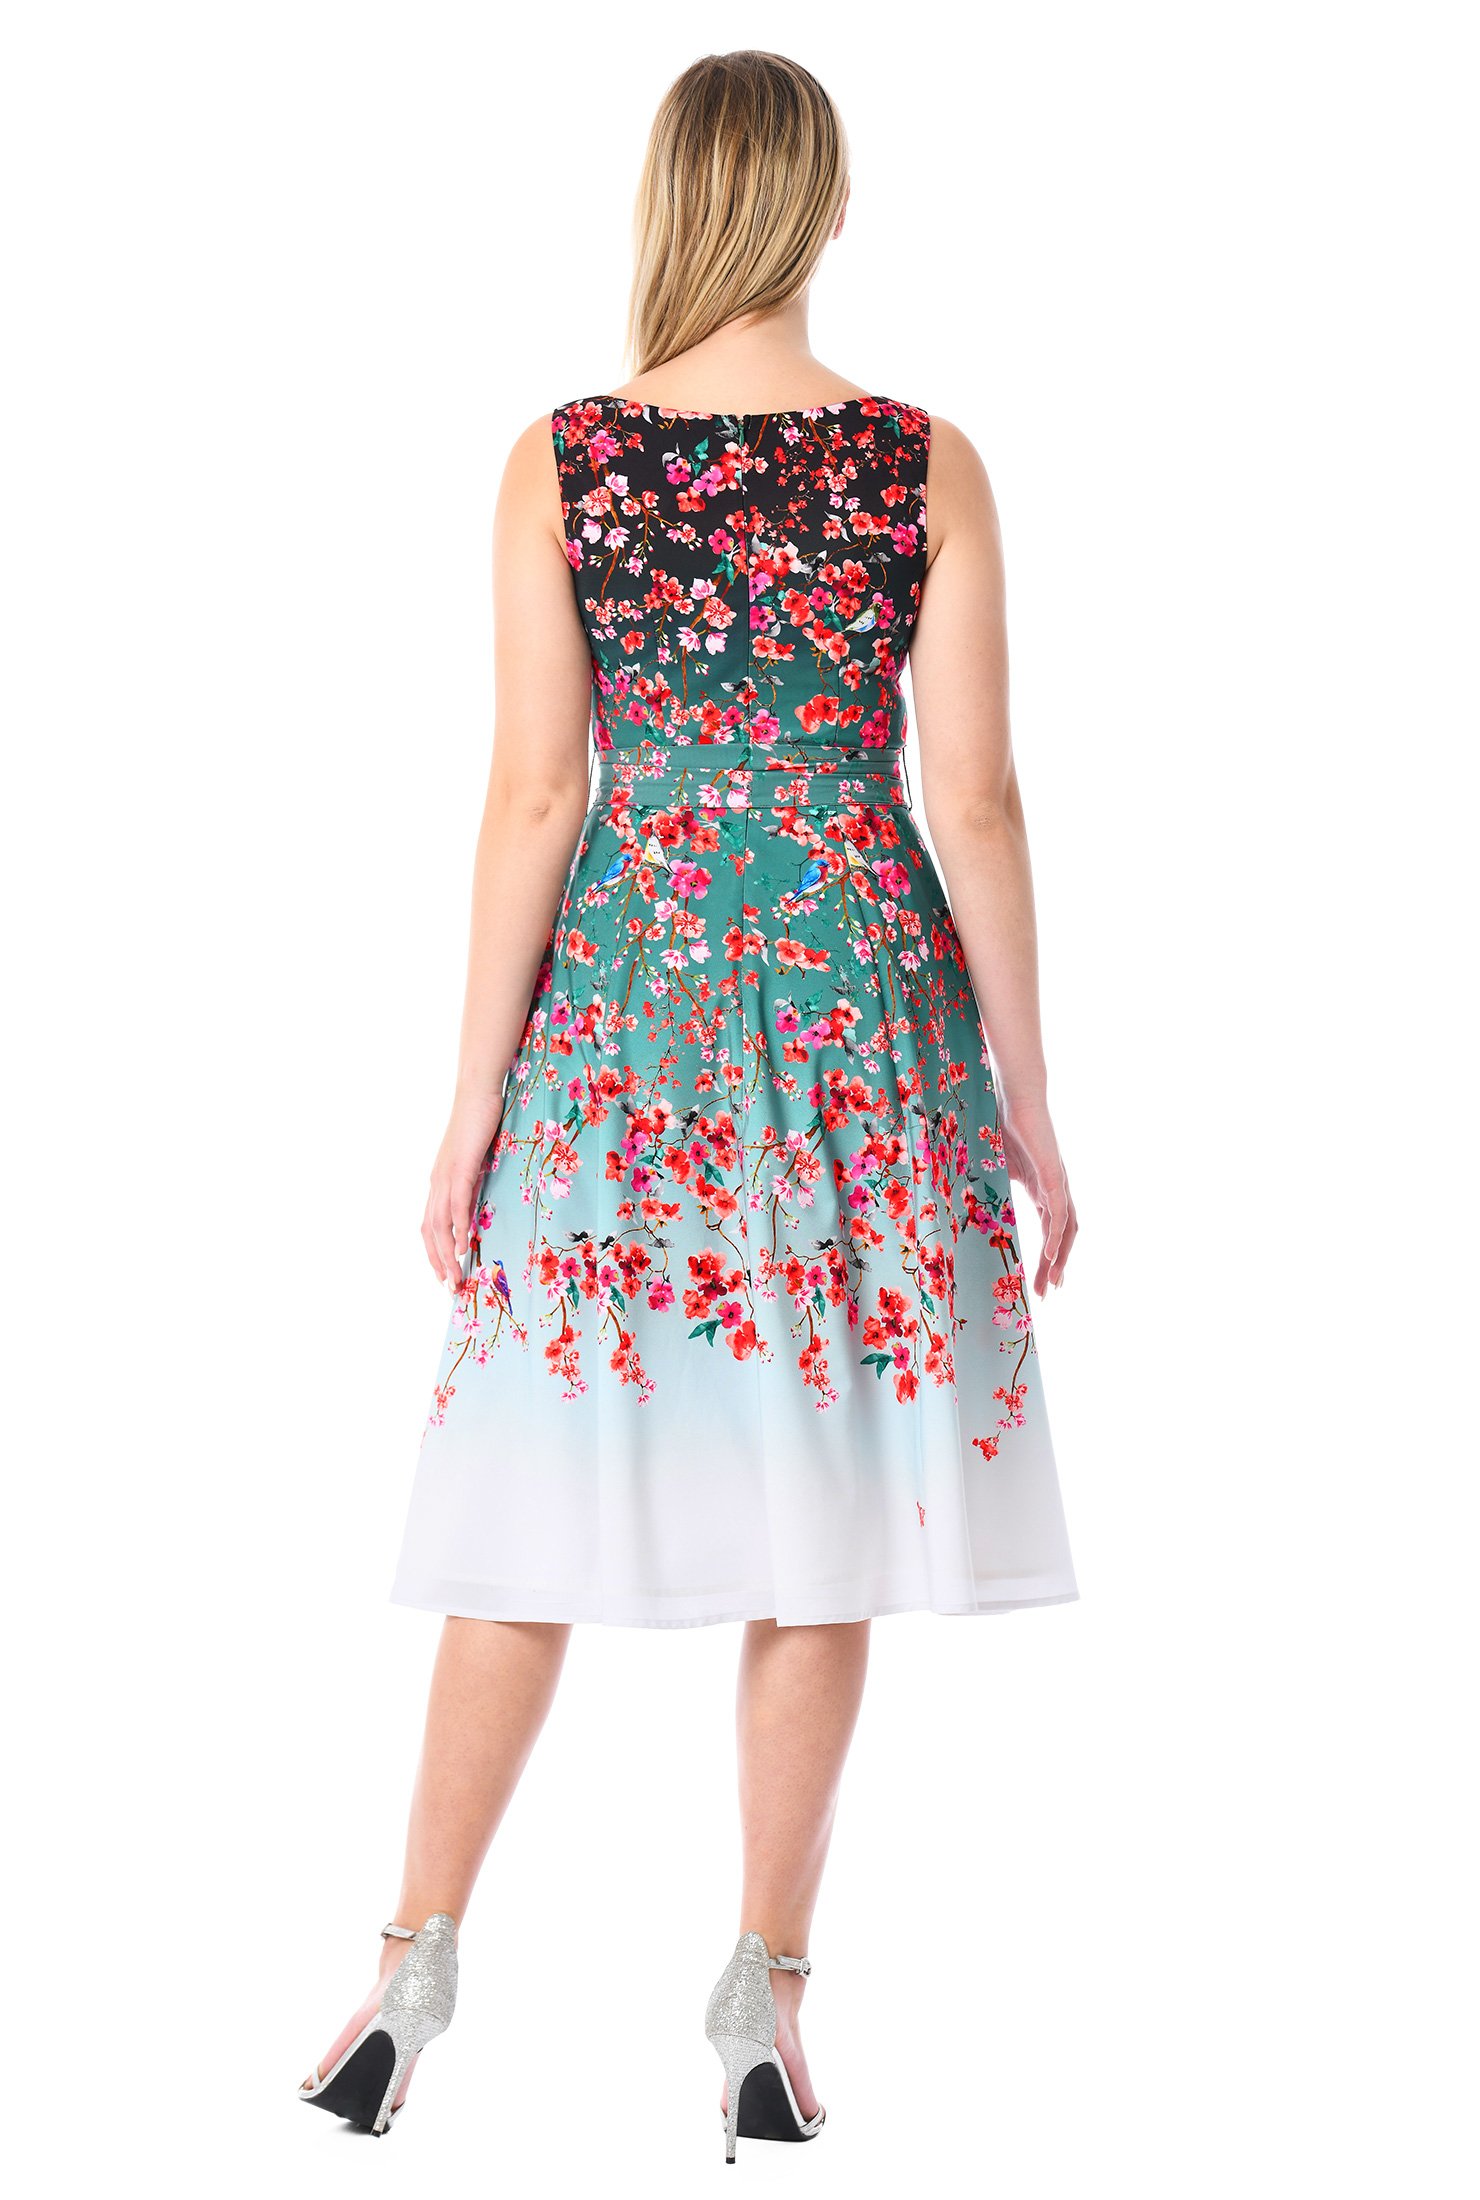 Shop Floral and bird print crepe dress | eShakti